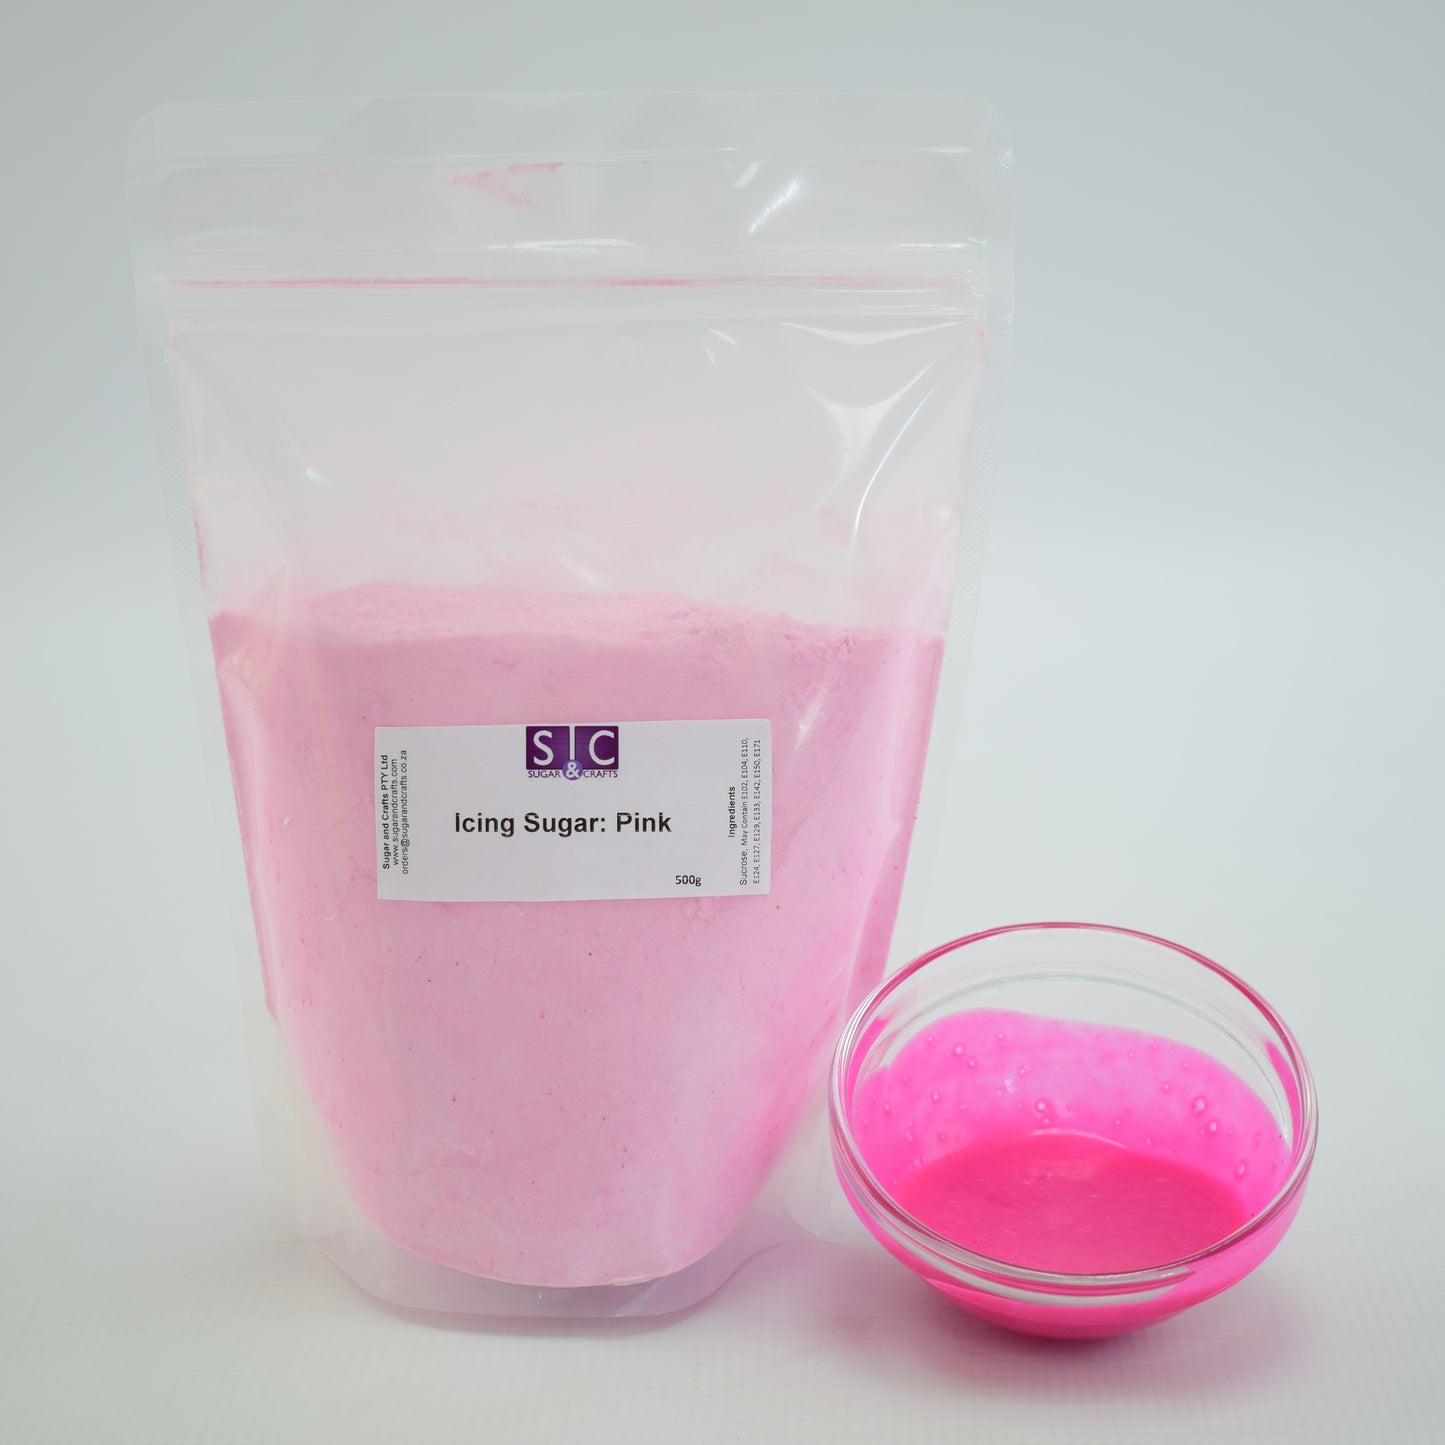 Coloured Icing Sugar: Pink